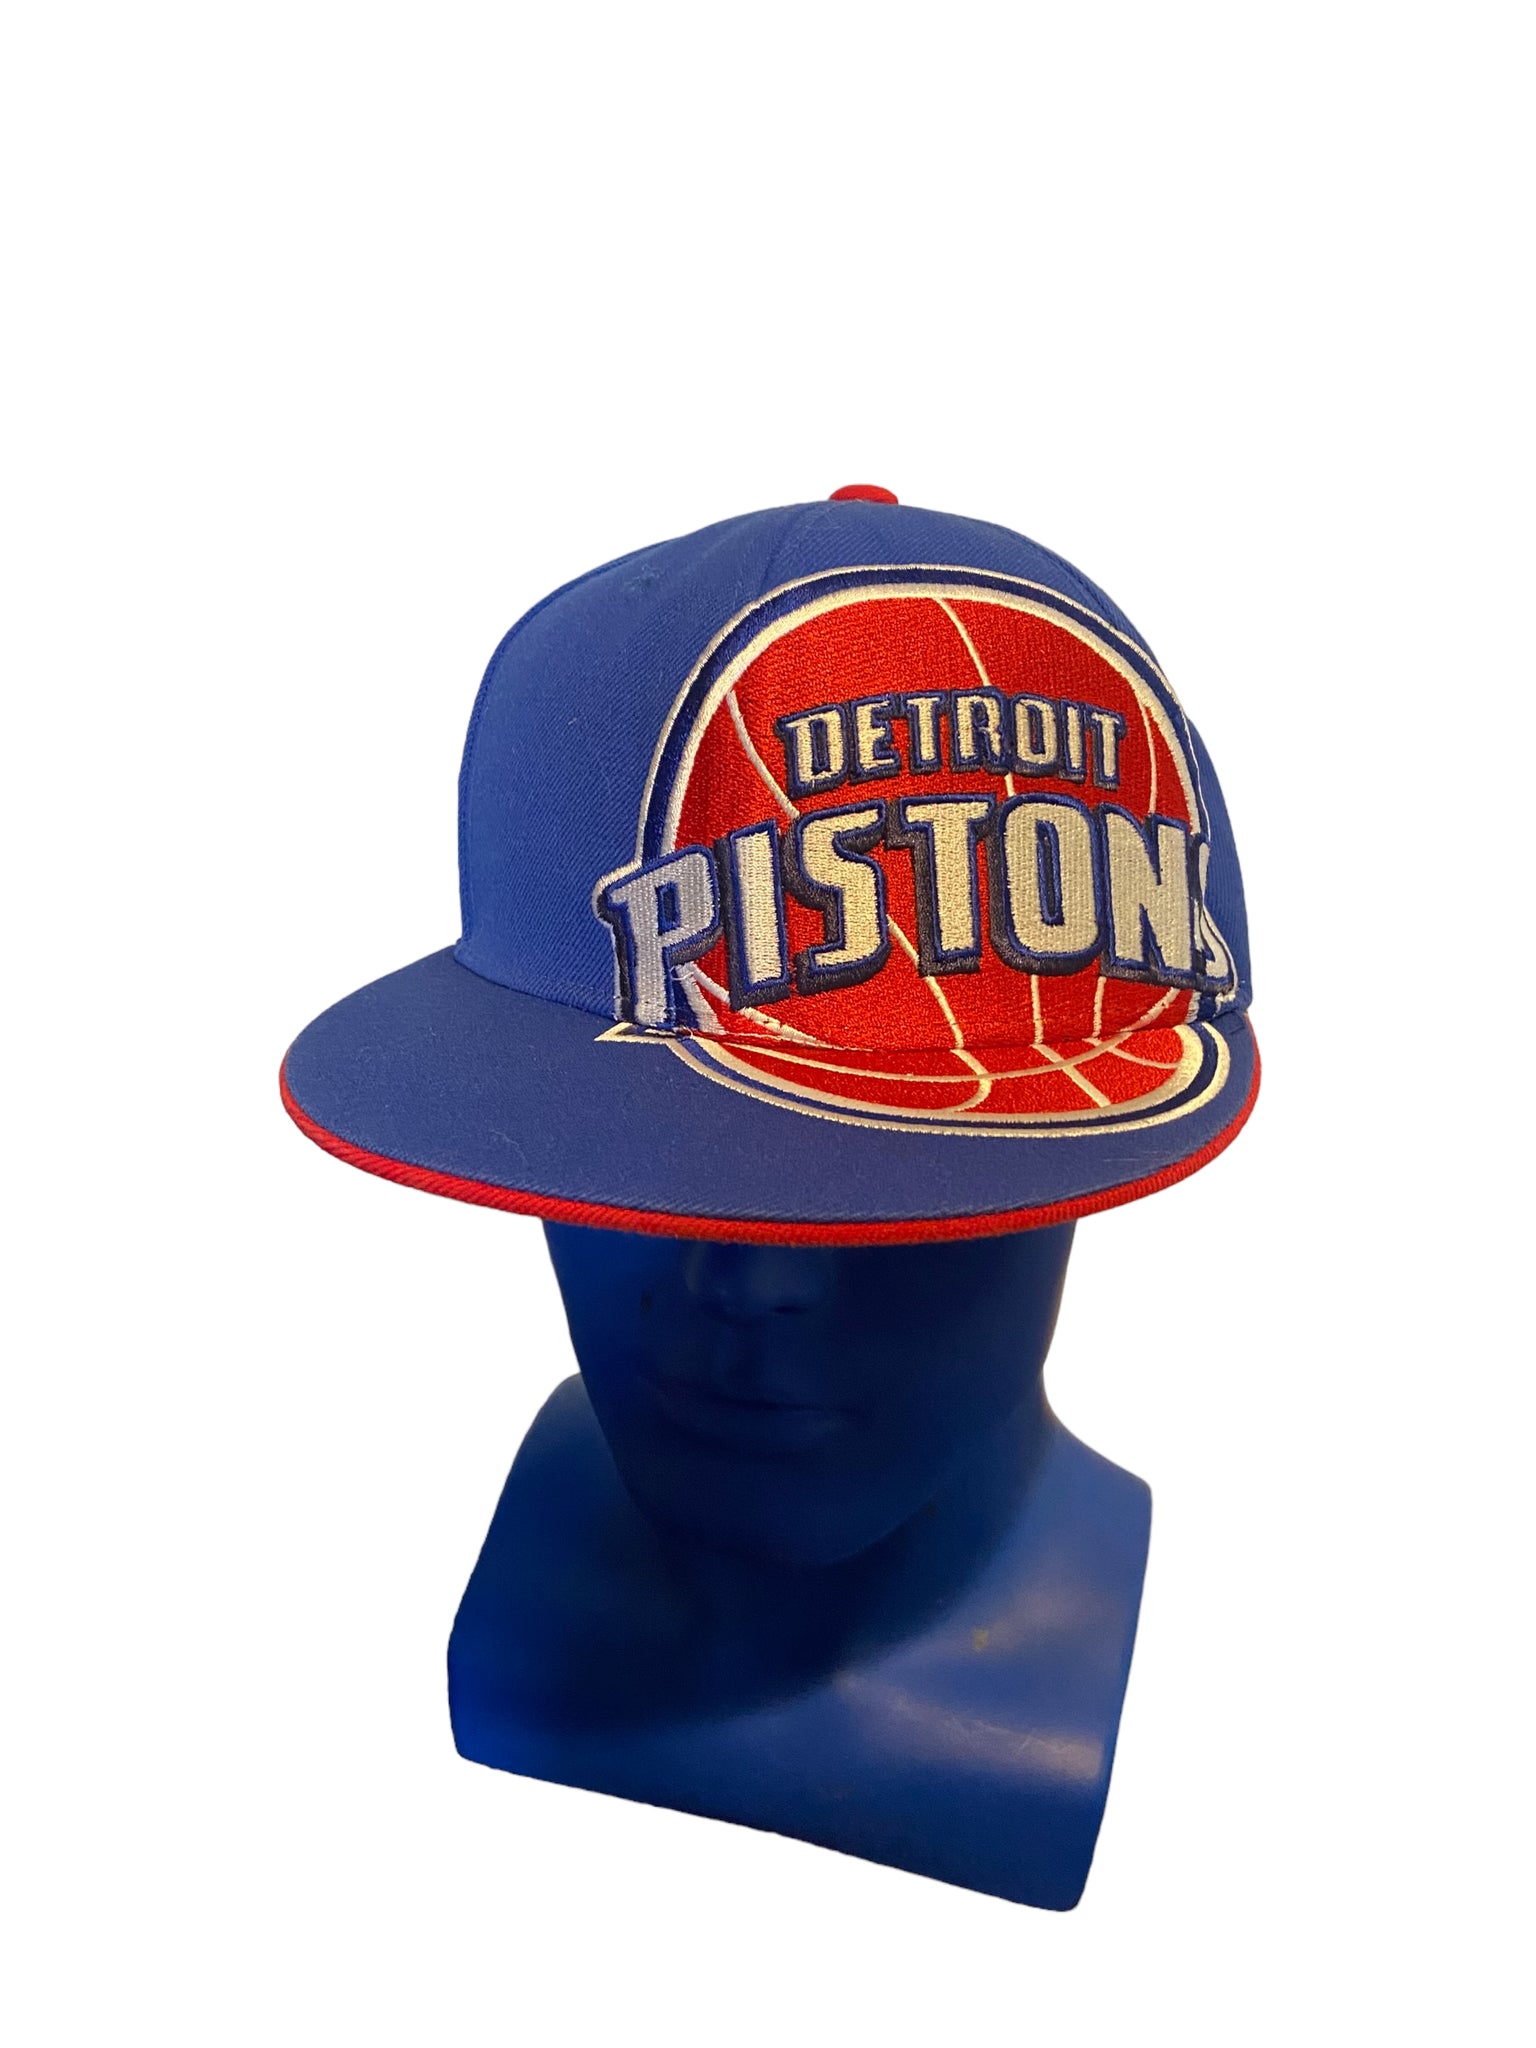 Detroit Pistons Red White & Blue Snapback Hat  NBA Big Logo